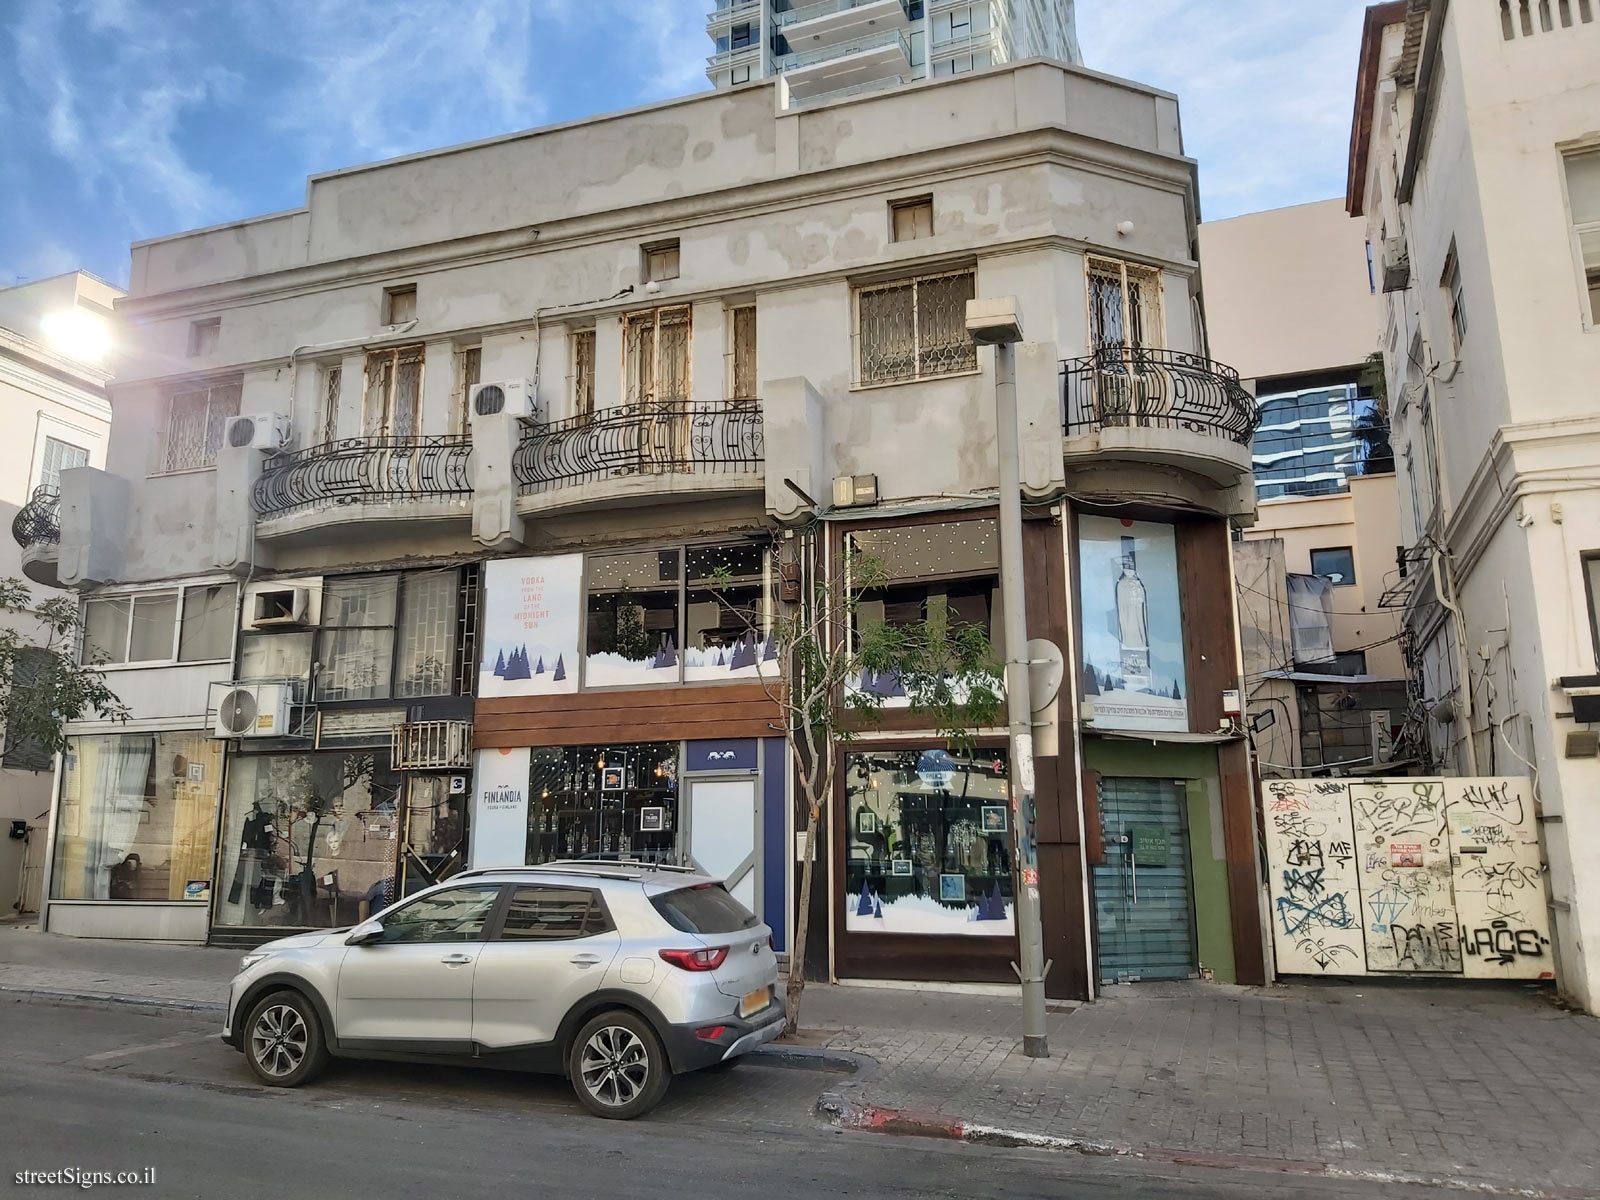 Simcha-Alter and Rebecca Gutman - The houses of the founders of Tel Aviv - Herzl St 3, Tel Aviv-Yafo, Israel